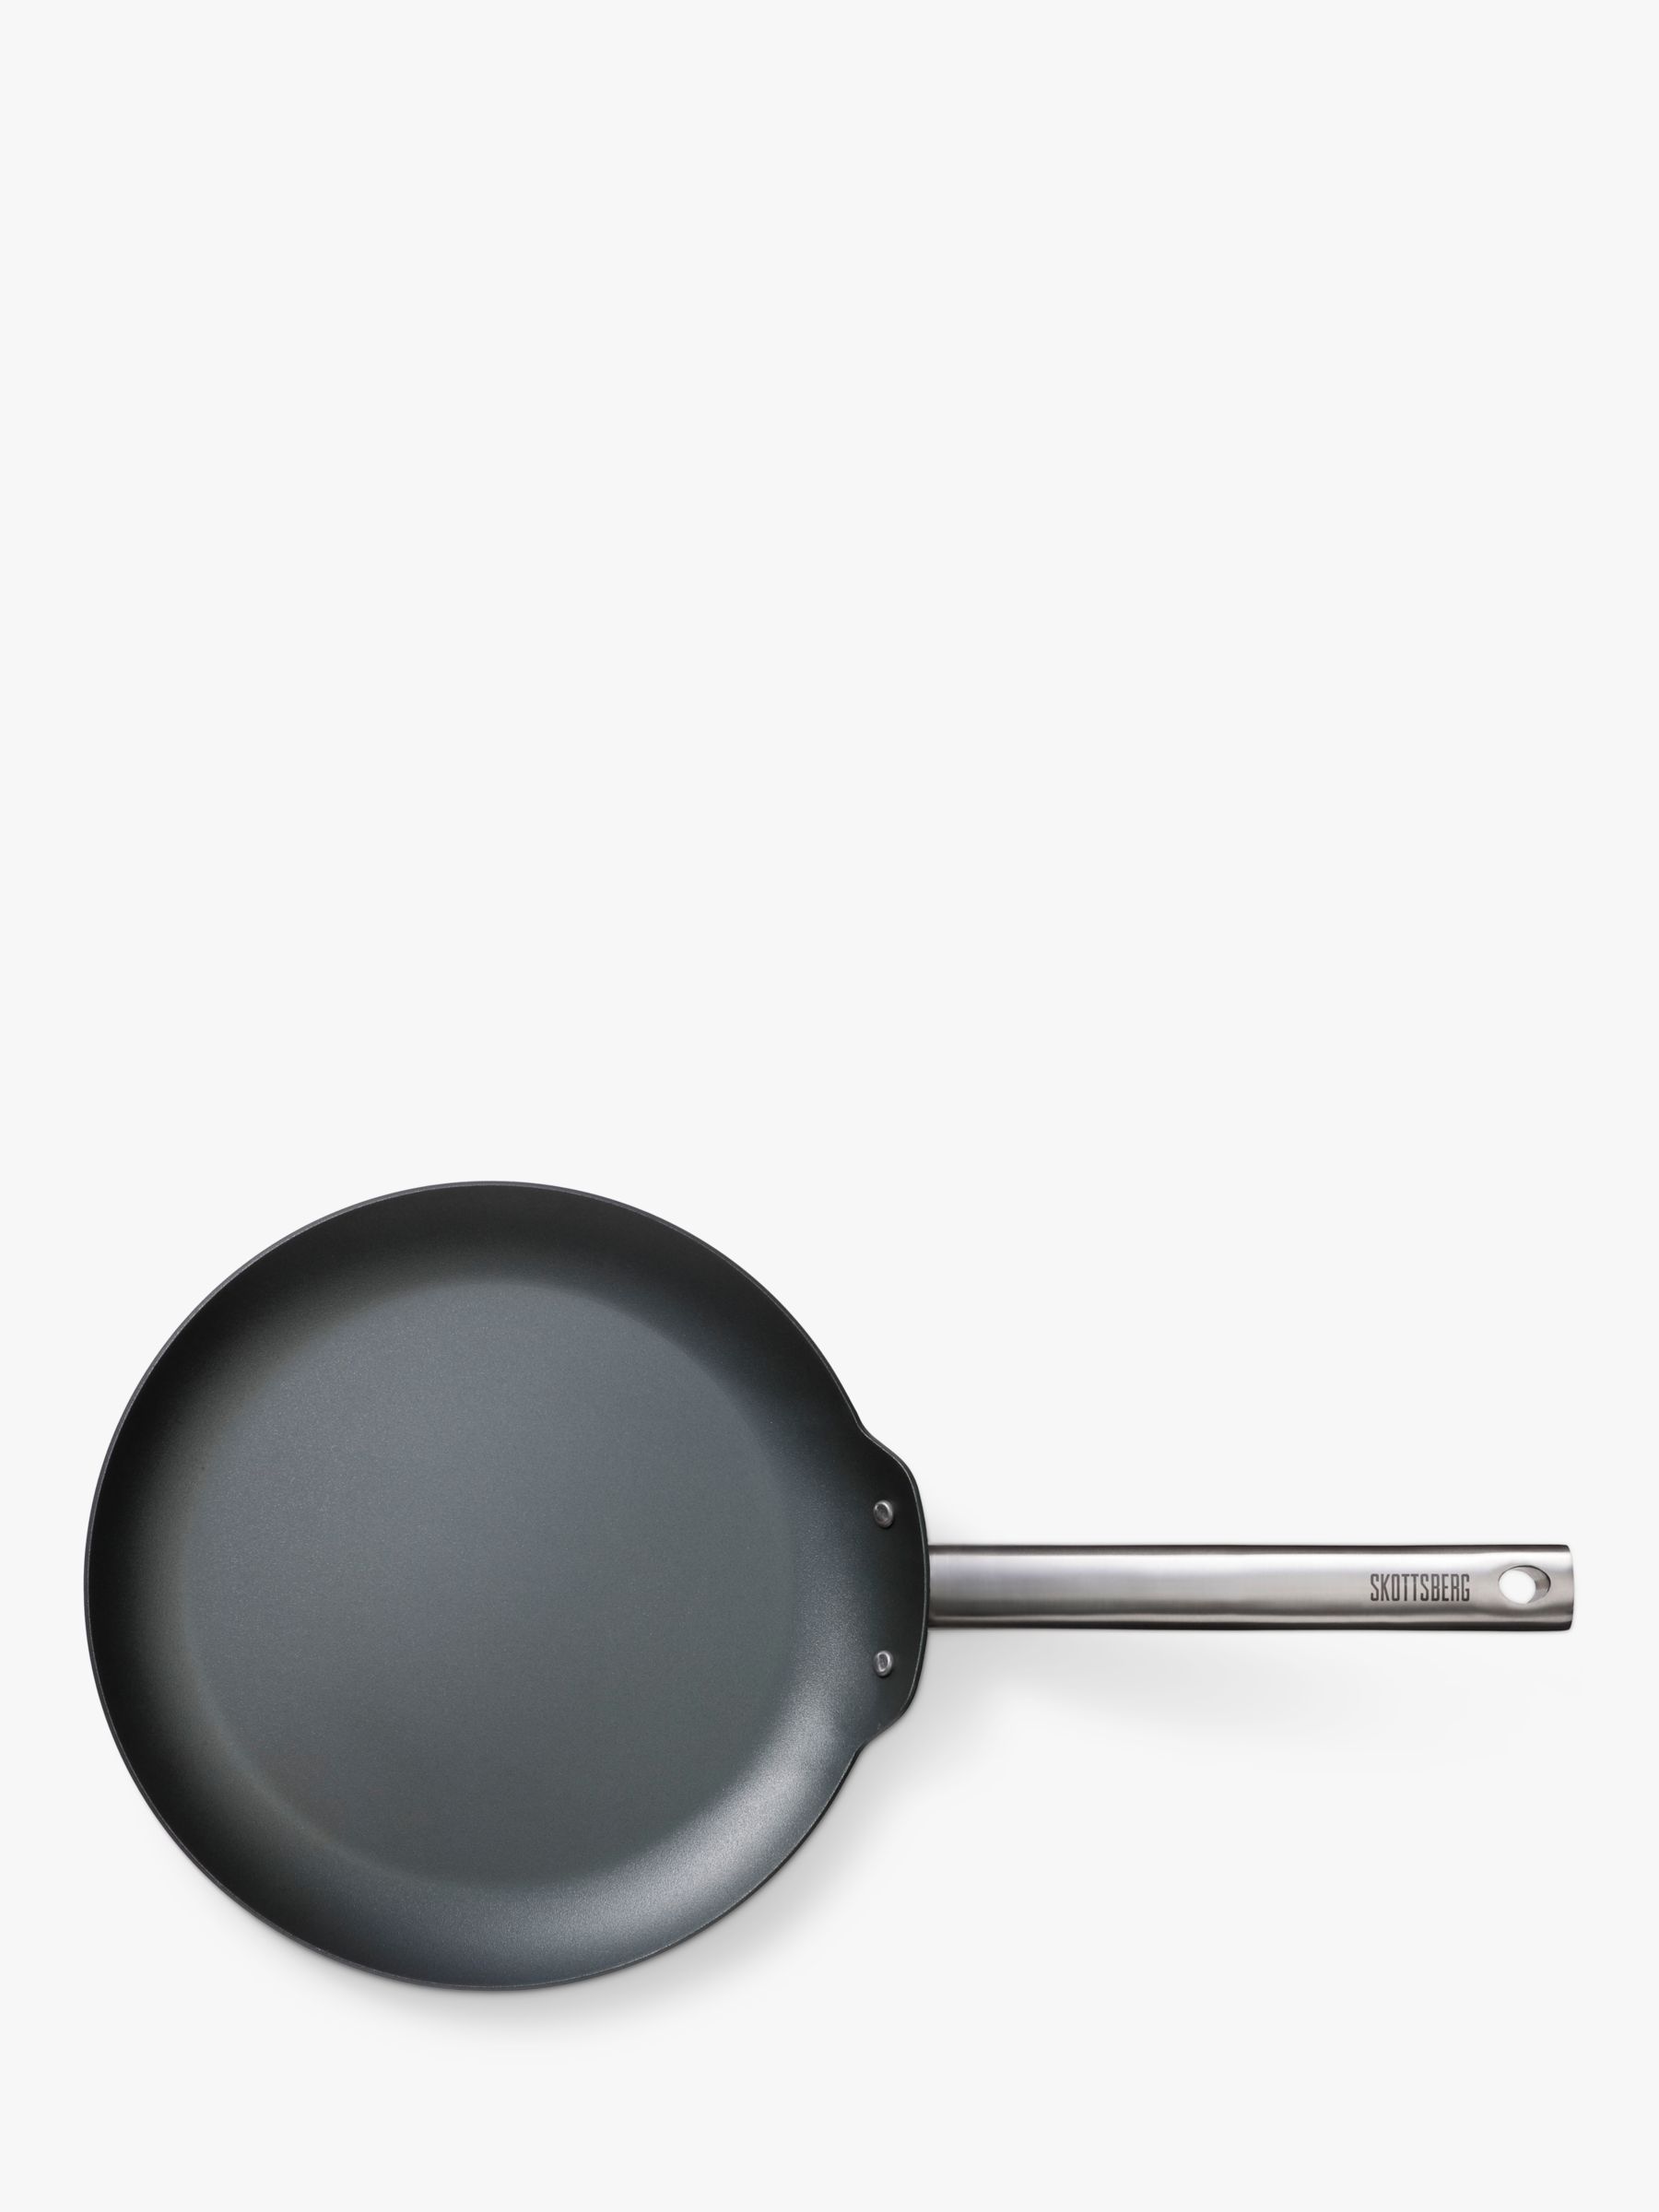 World Cuisine A4172514 Heavy Duty 5.5 inch Carbon Steel Crepe Pan